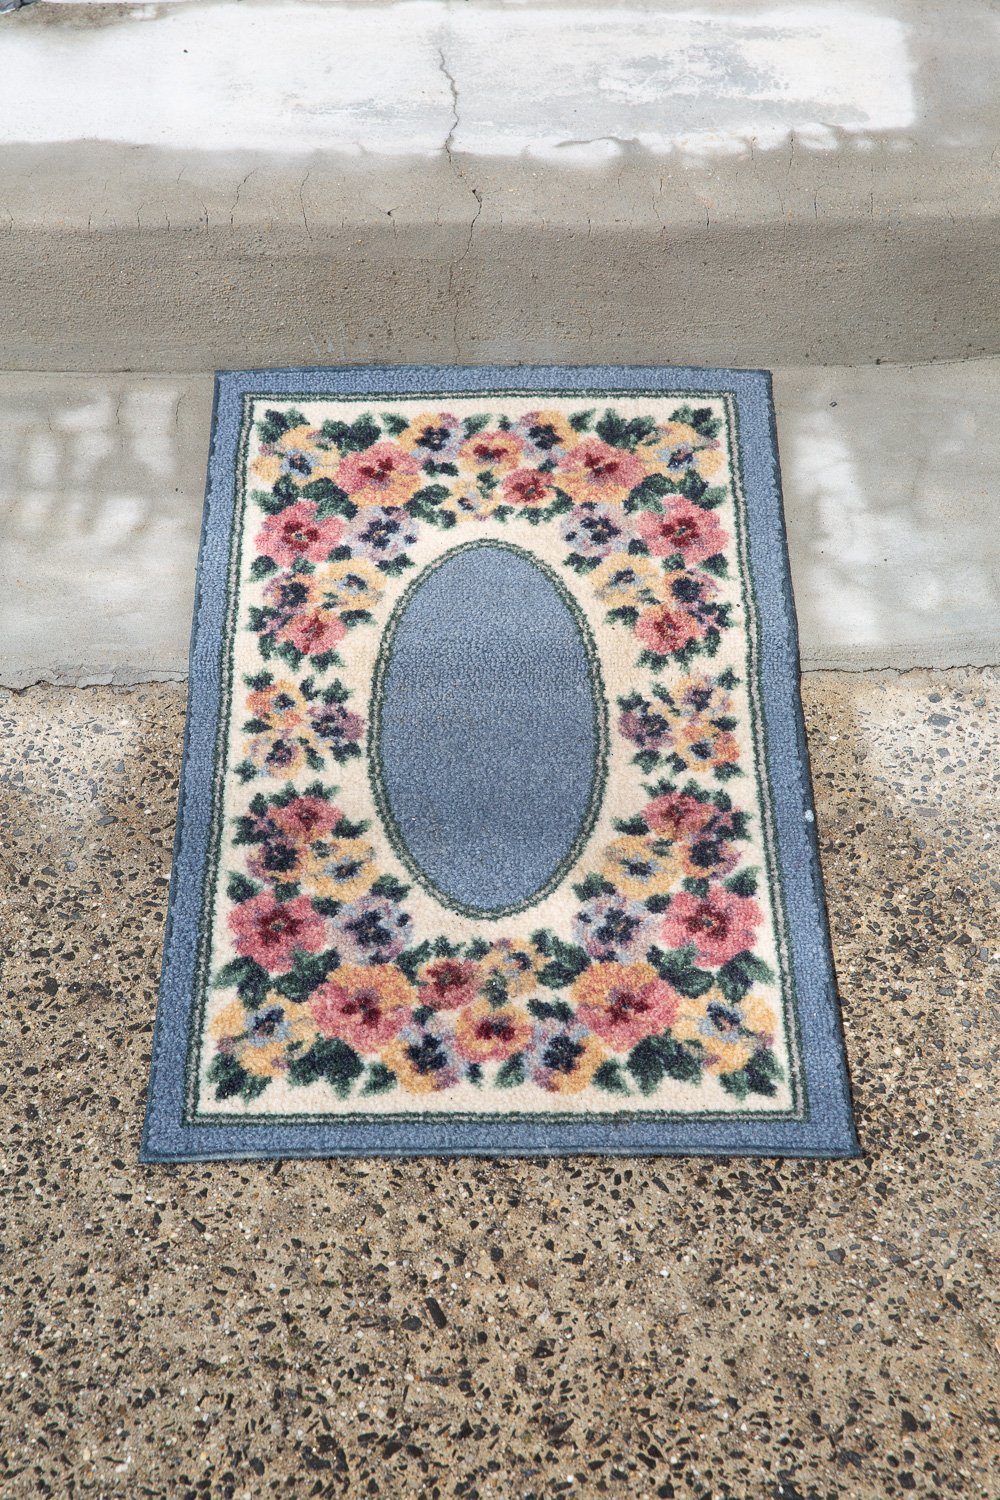 Doormat (Hatfield, MA), 2022